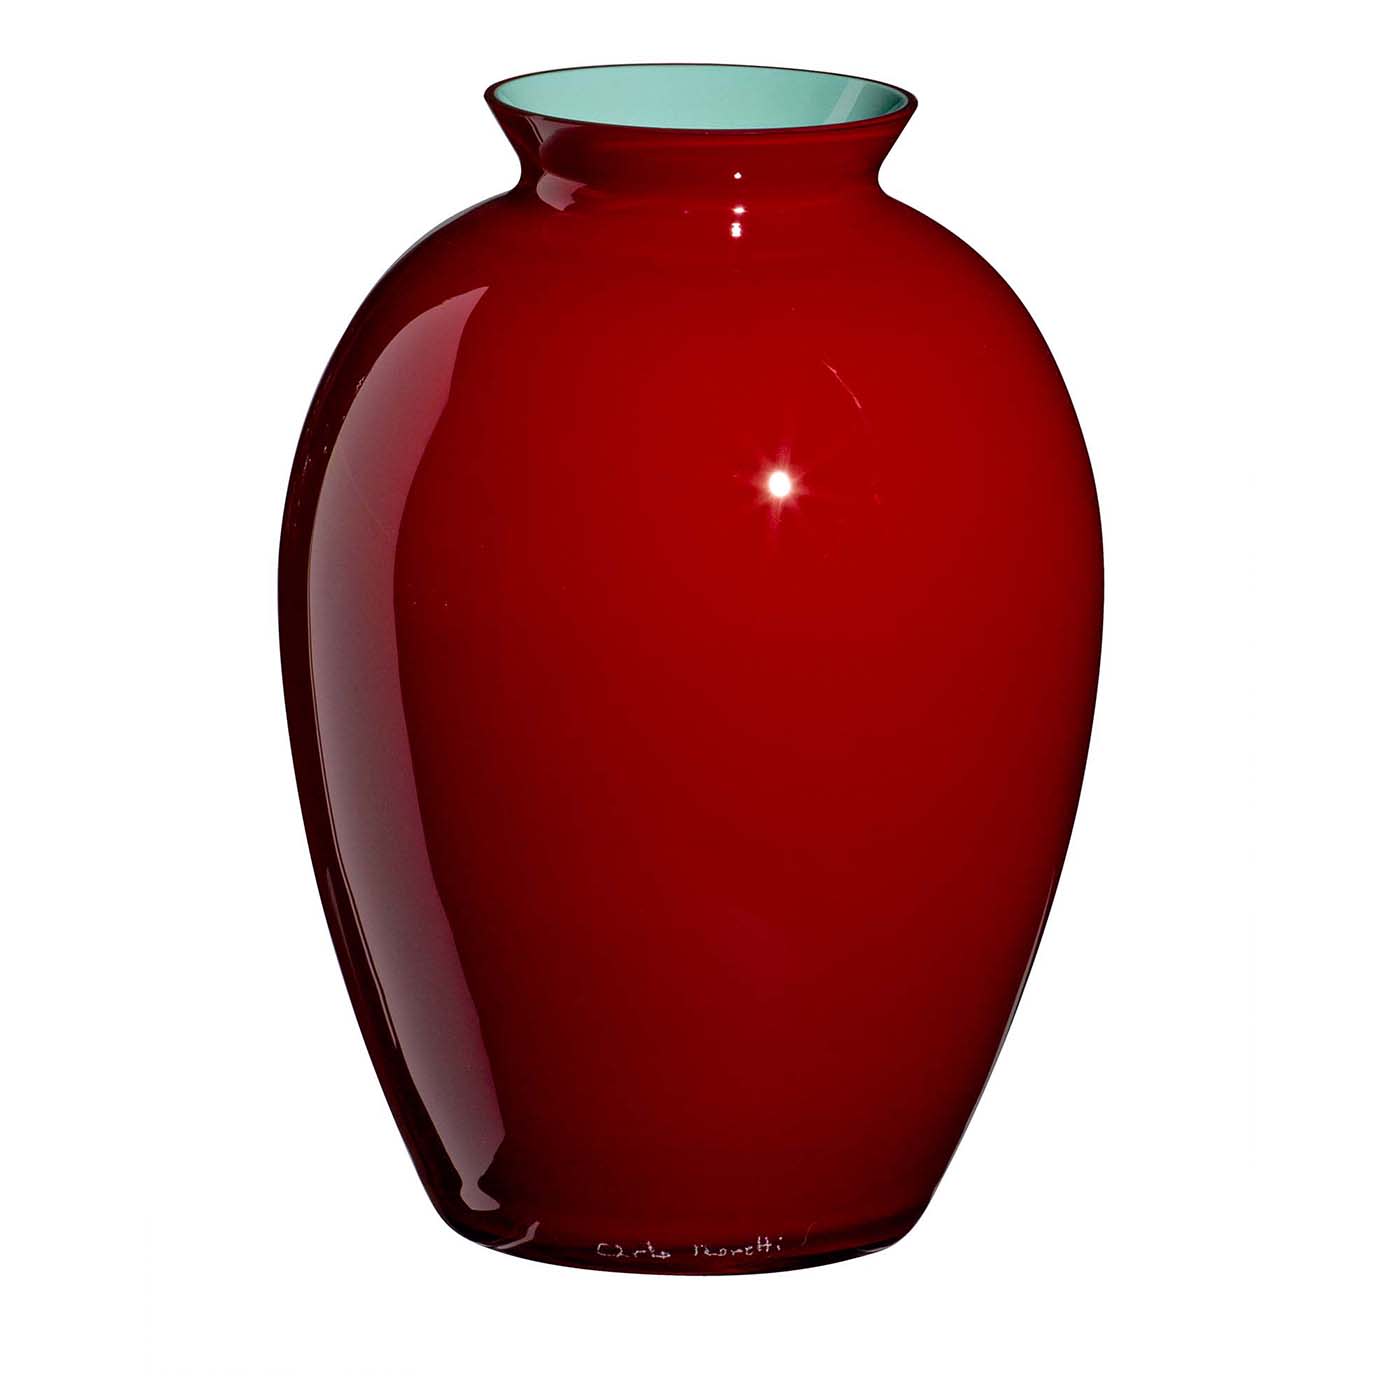 Lopas Medium Red and Turquoise Vase by Carlo Moretti - Carlo Moretti